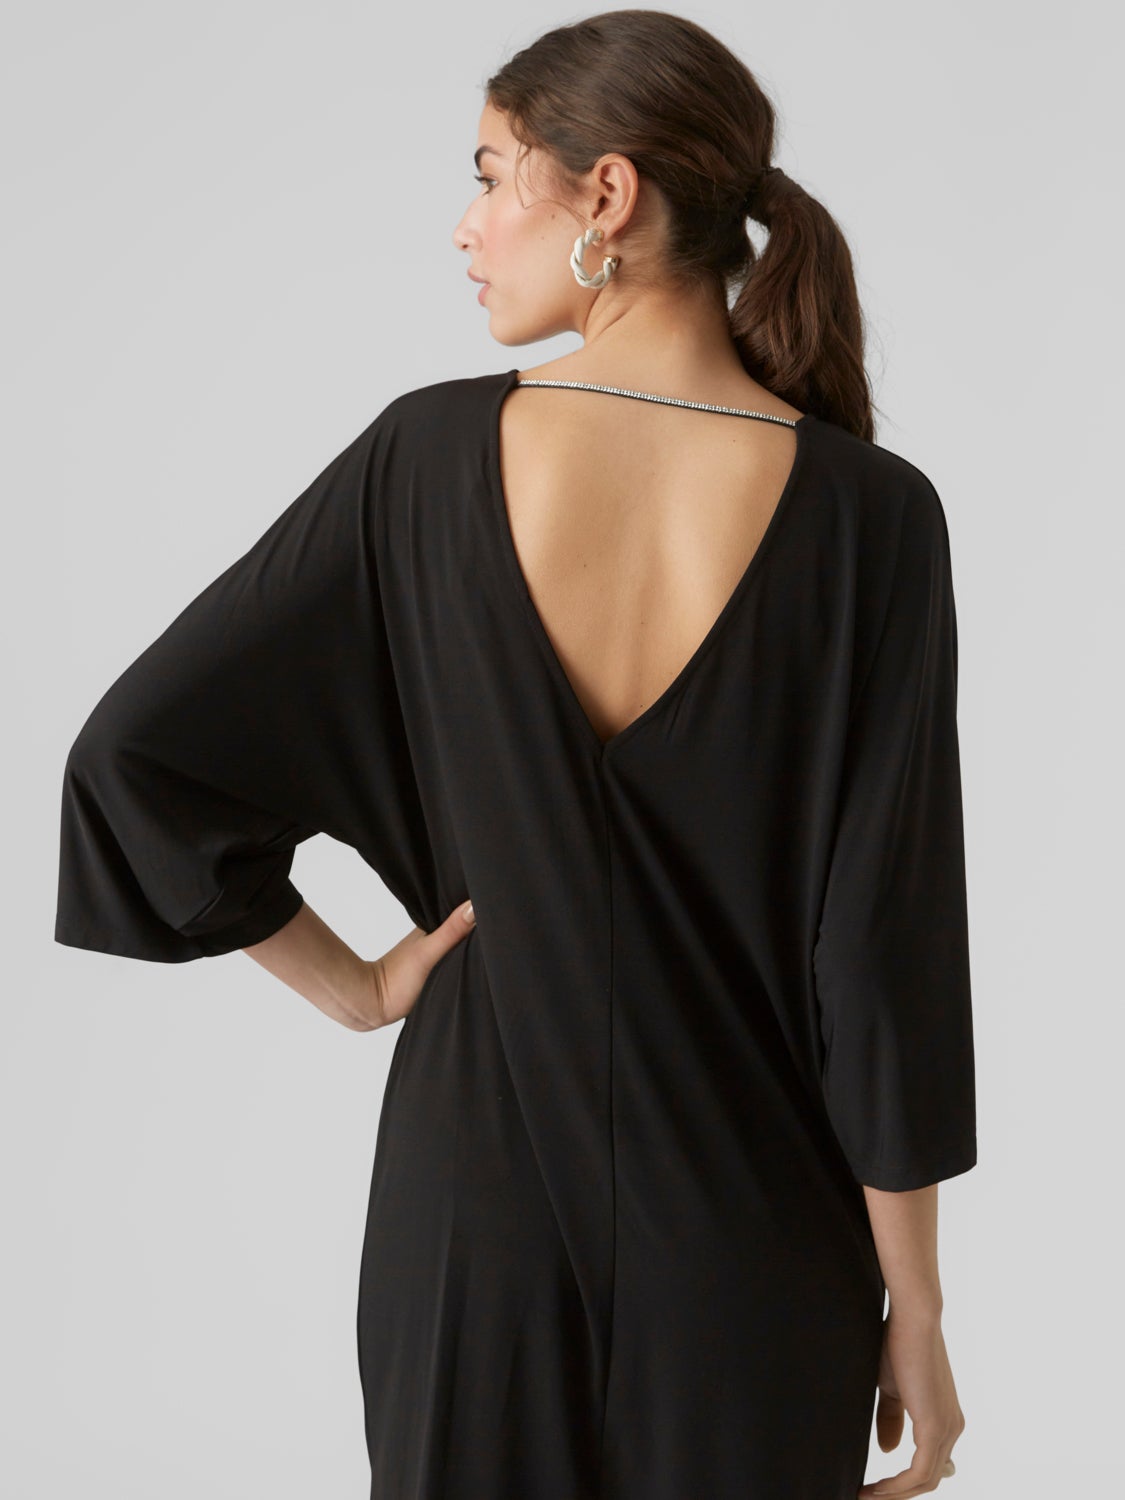 Buy Vero Moda Black Lace Sheath Dress - Dresses for Women 822472 | Myntra